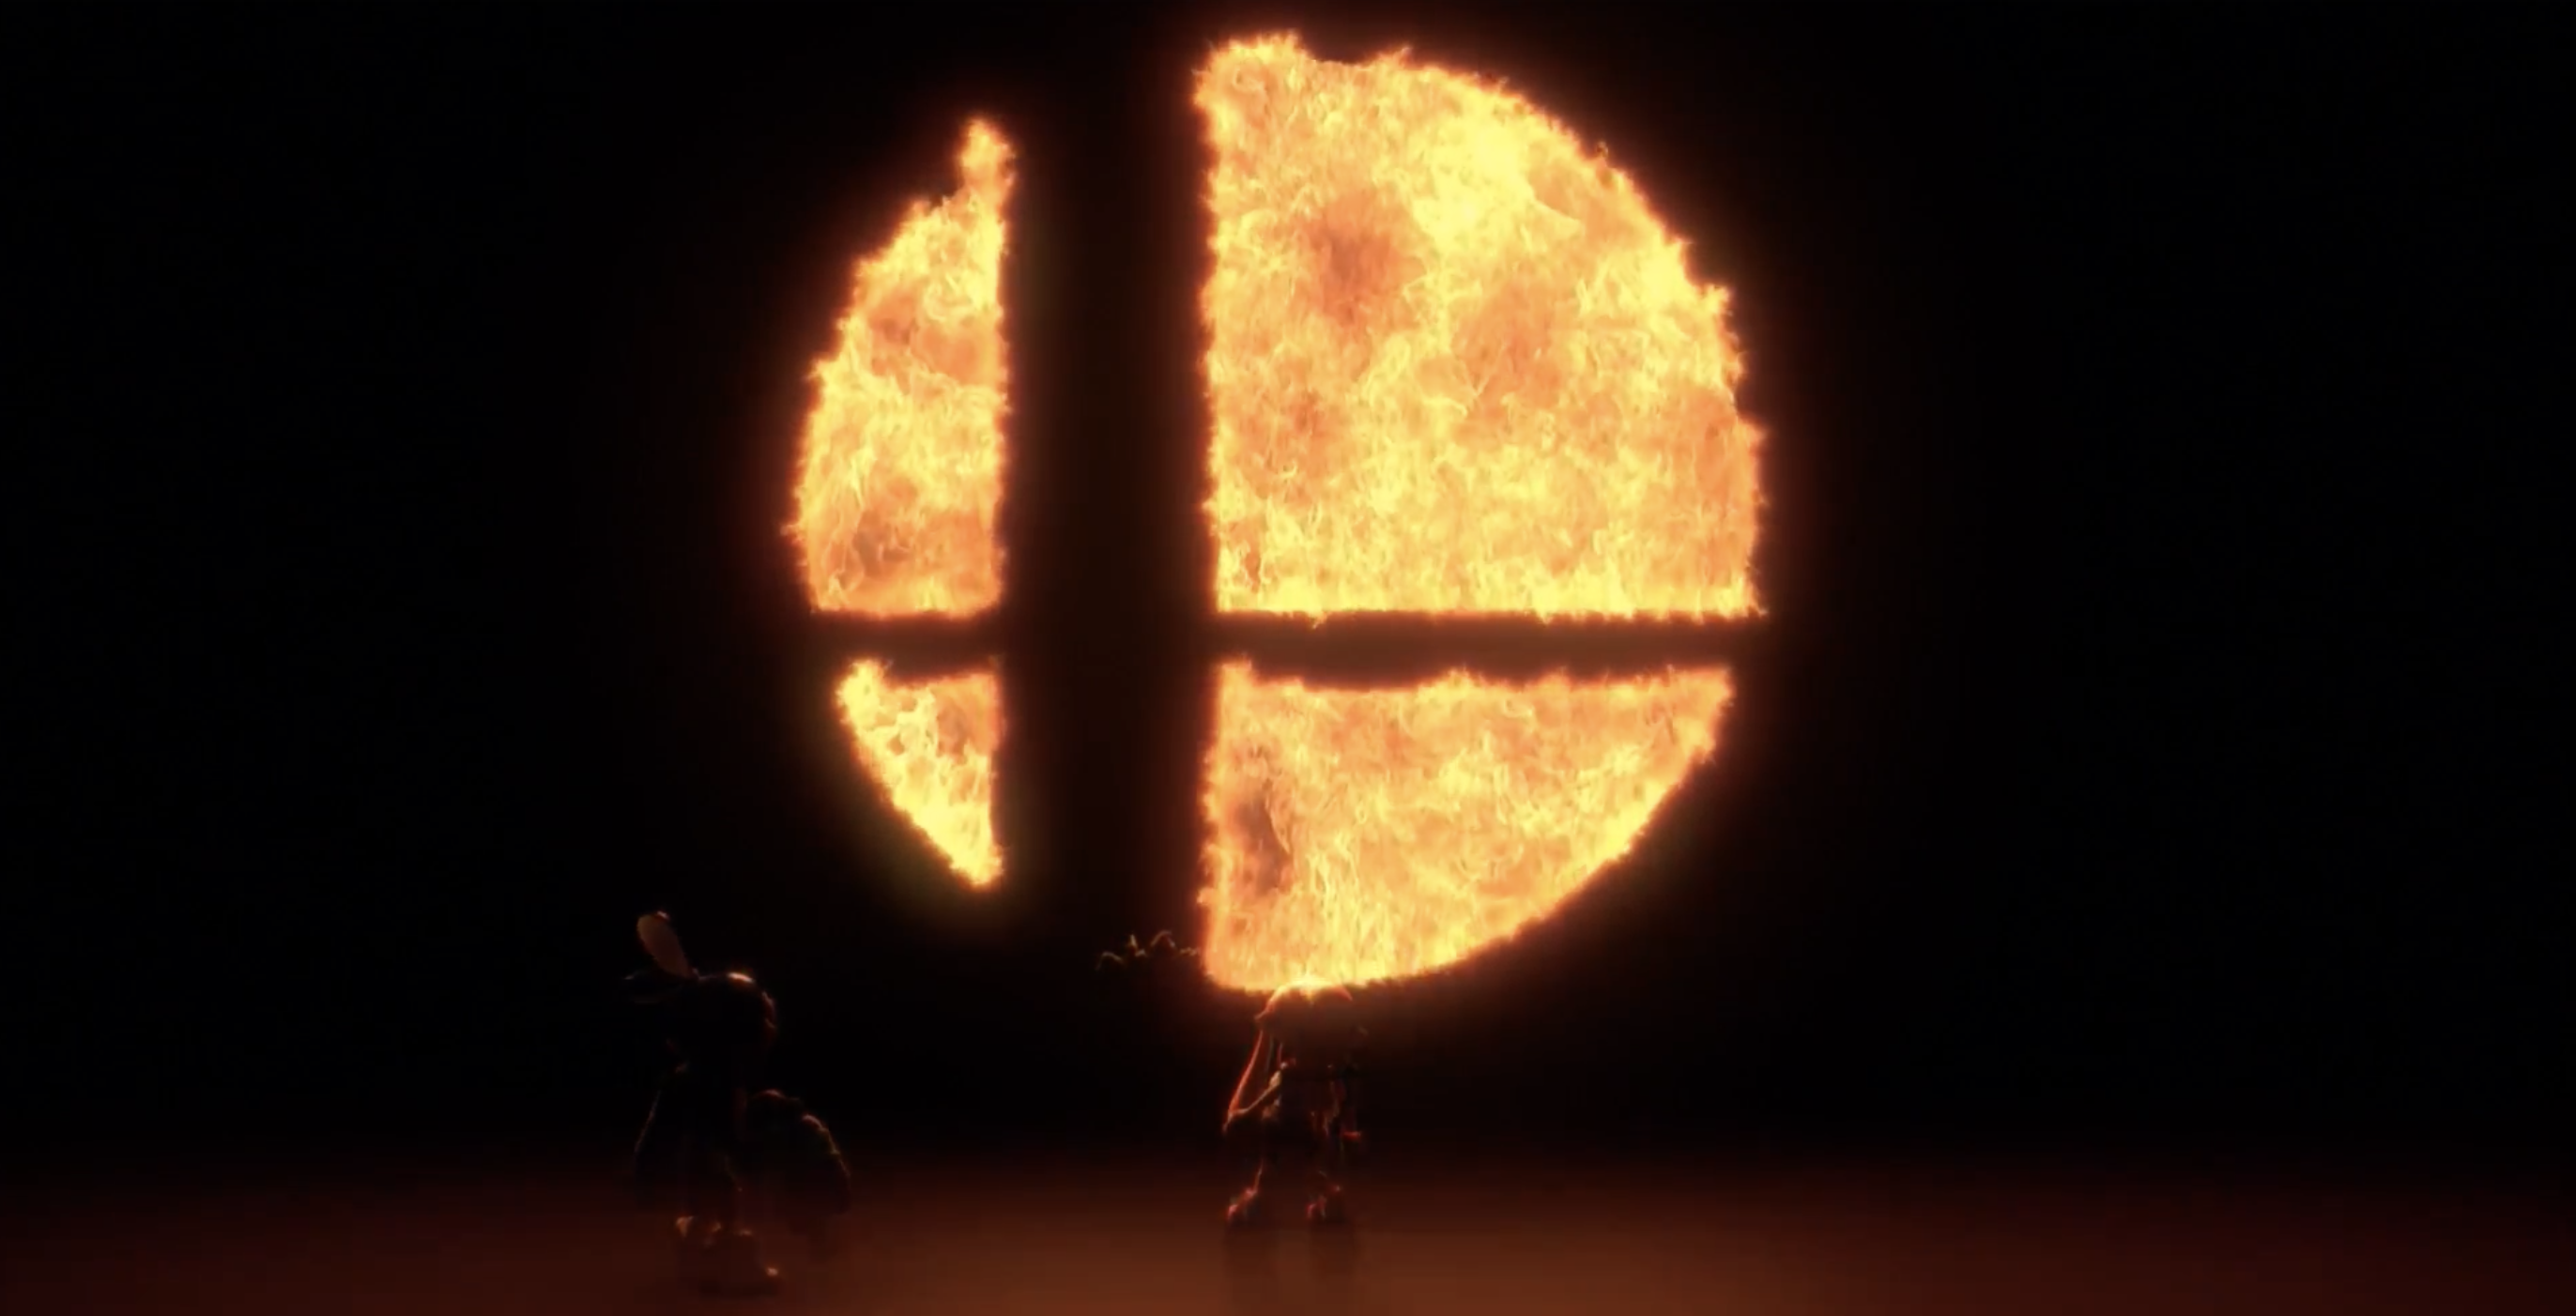 The Super Smash Bros logo in flame